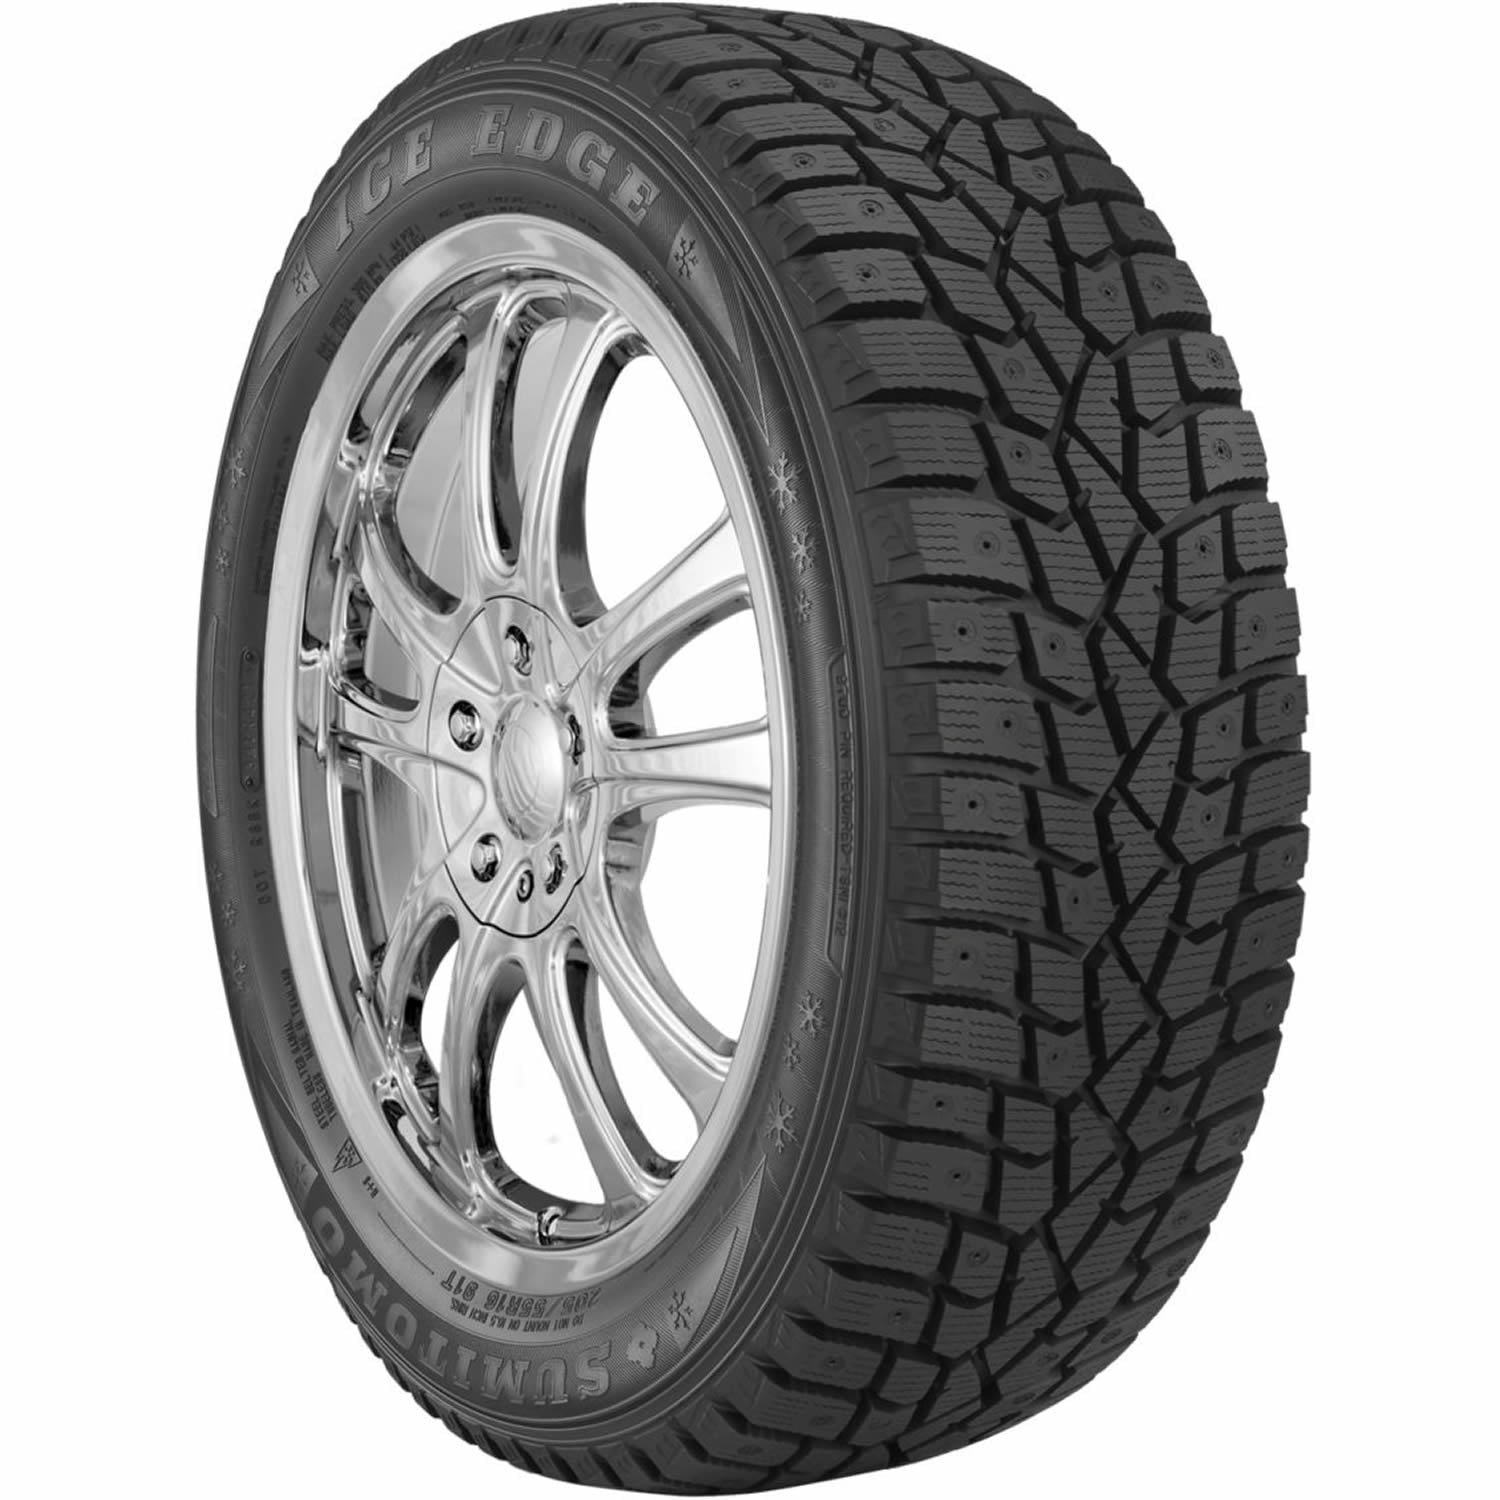 SUMITOMO ICE EDGE 265/70R16 (30.7X10.8R 16) Tires